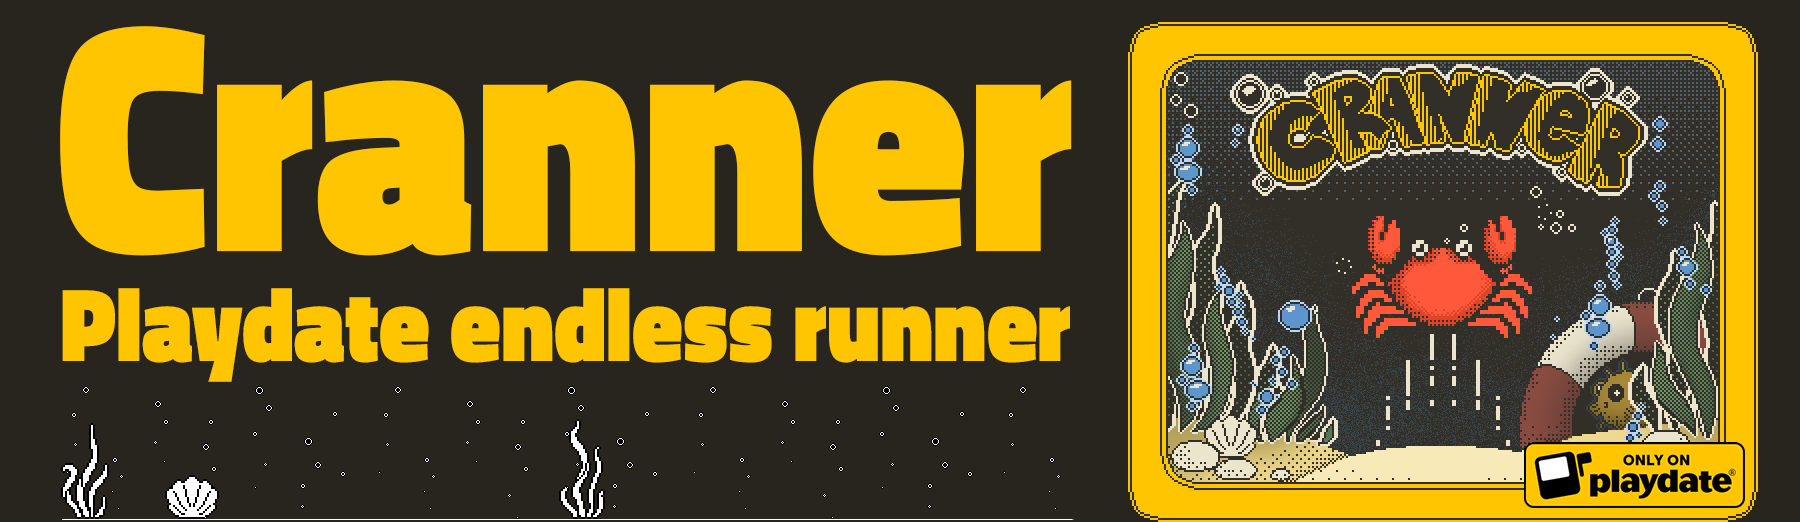 CRANNER - Playdate endless runner